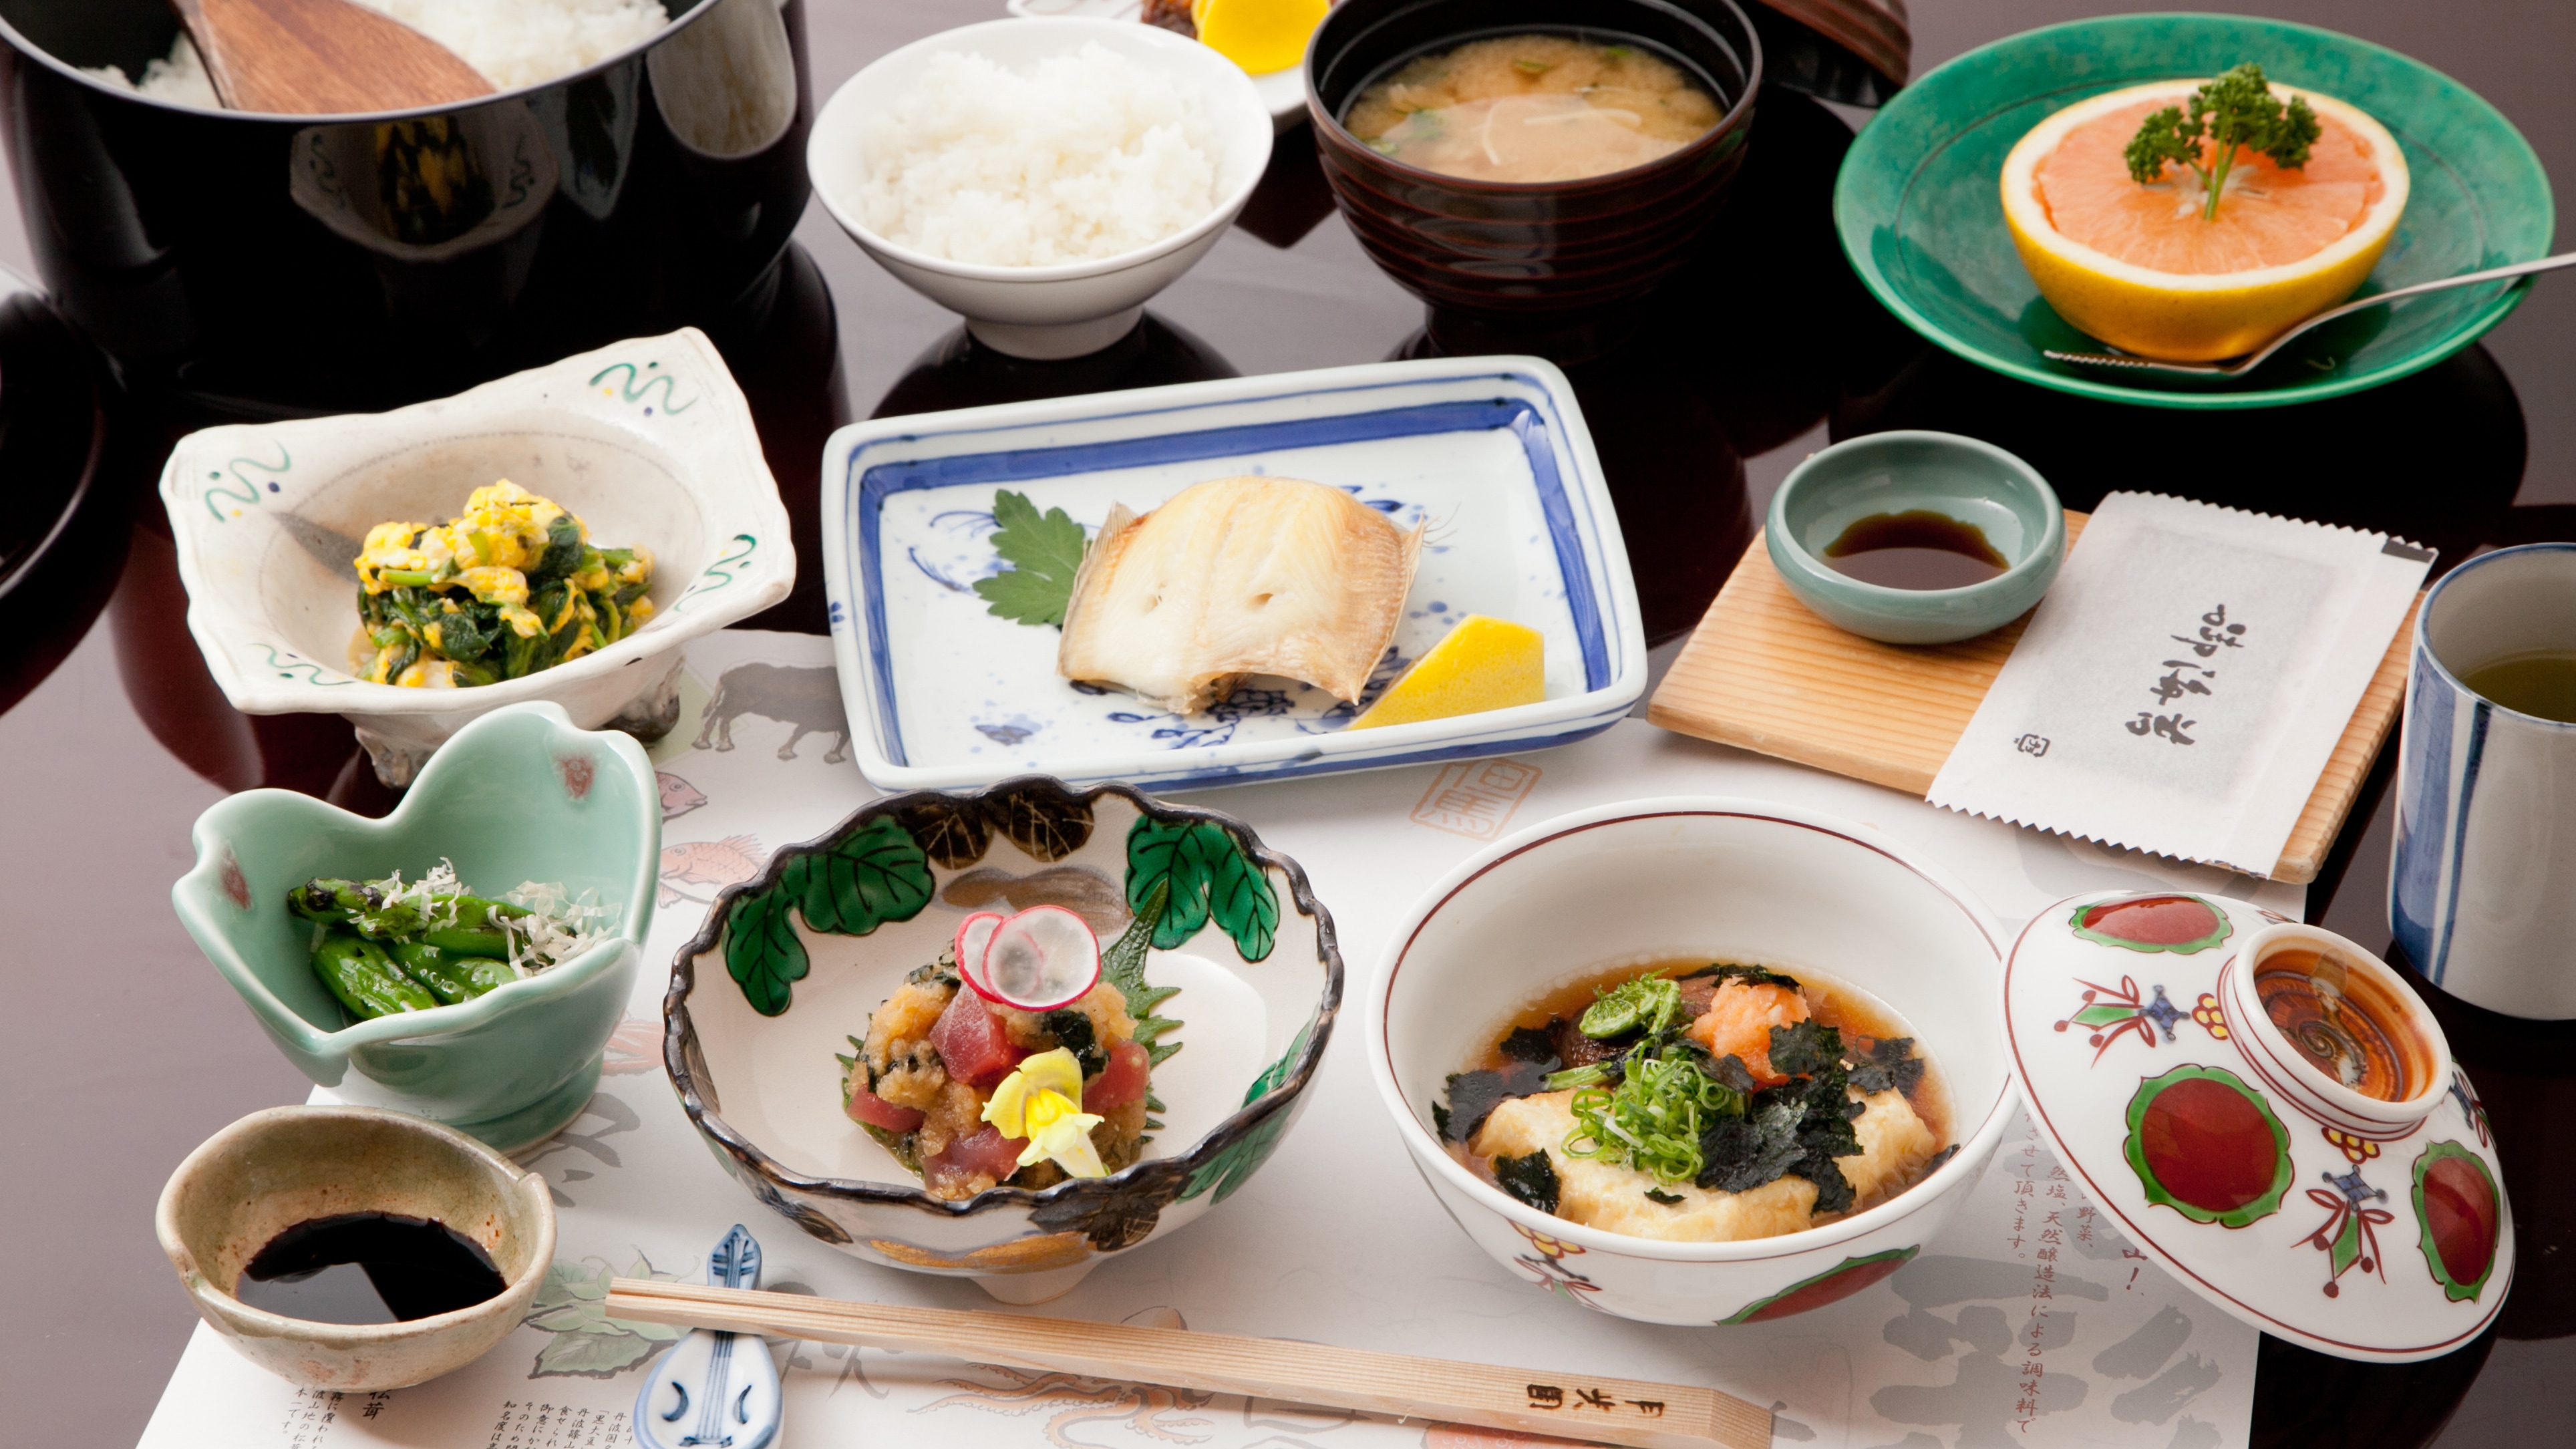 Sushi Lover Japanese Food Gift Idea Full Color Panoramic Mug